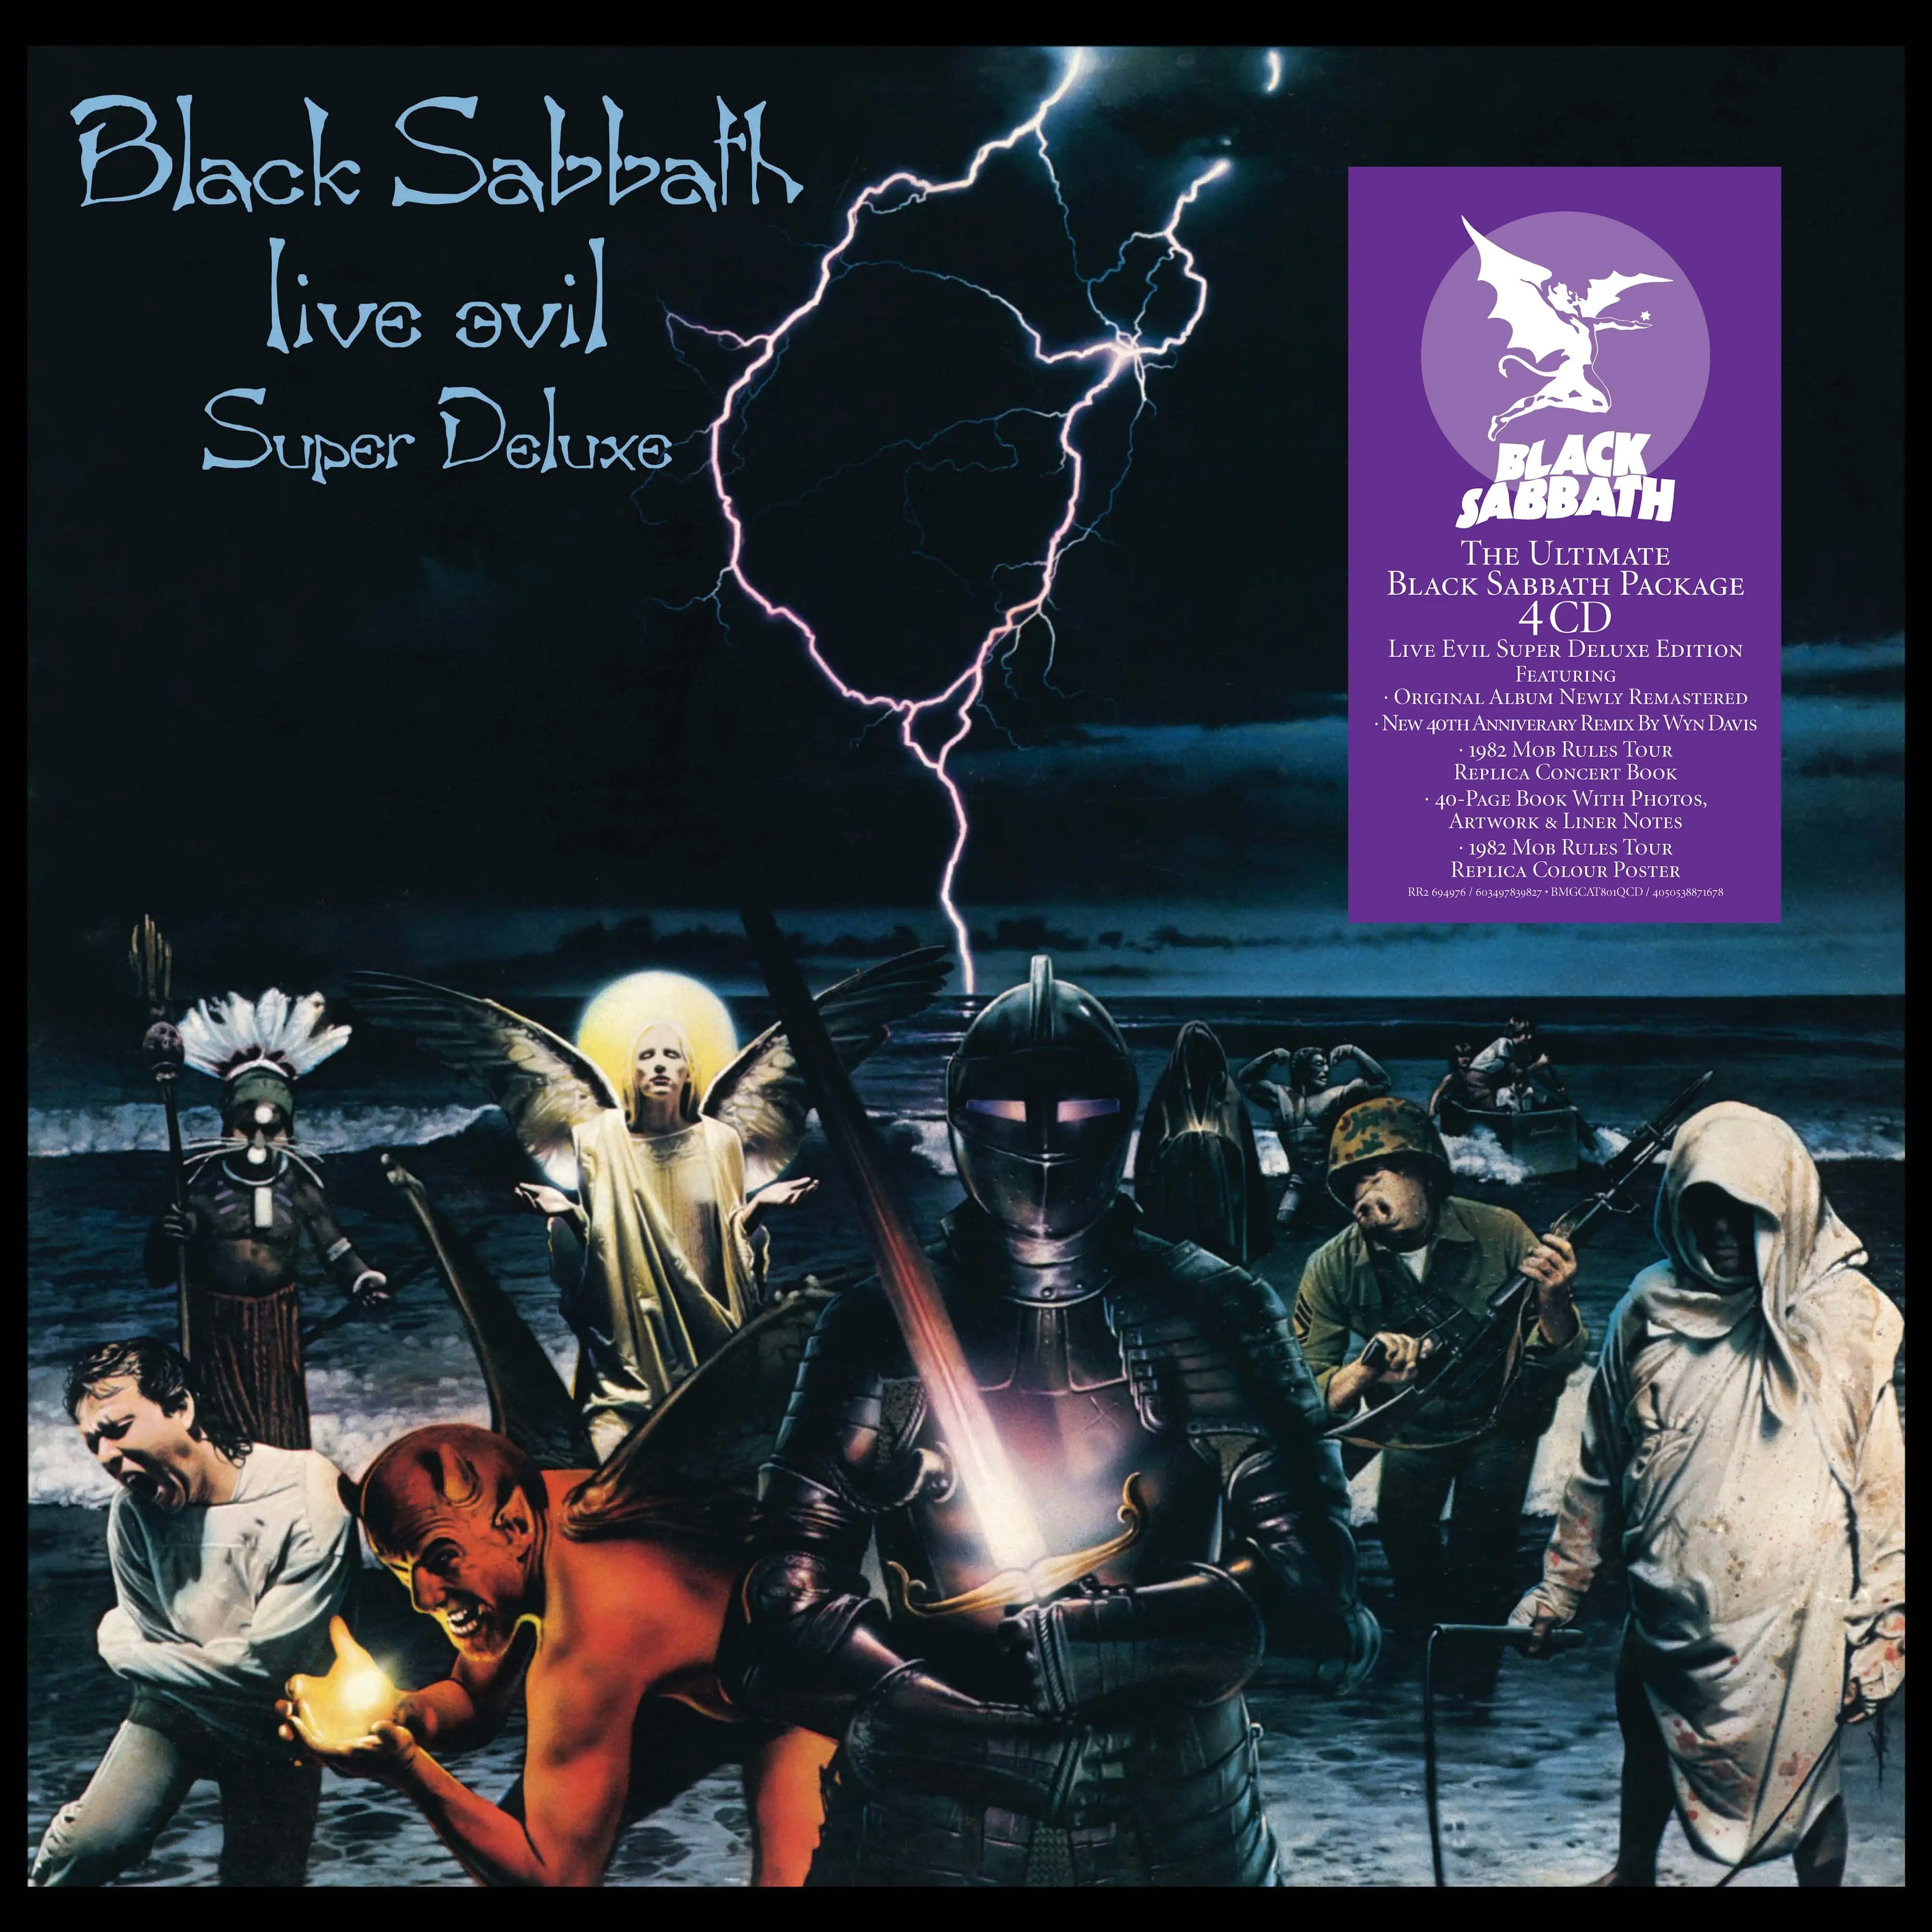 Album artwork for Album artwork for Live Evil (Super Deluxe) by Black Sabbath by Live Evil (Super Deluxe) - Black Sabbath